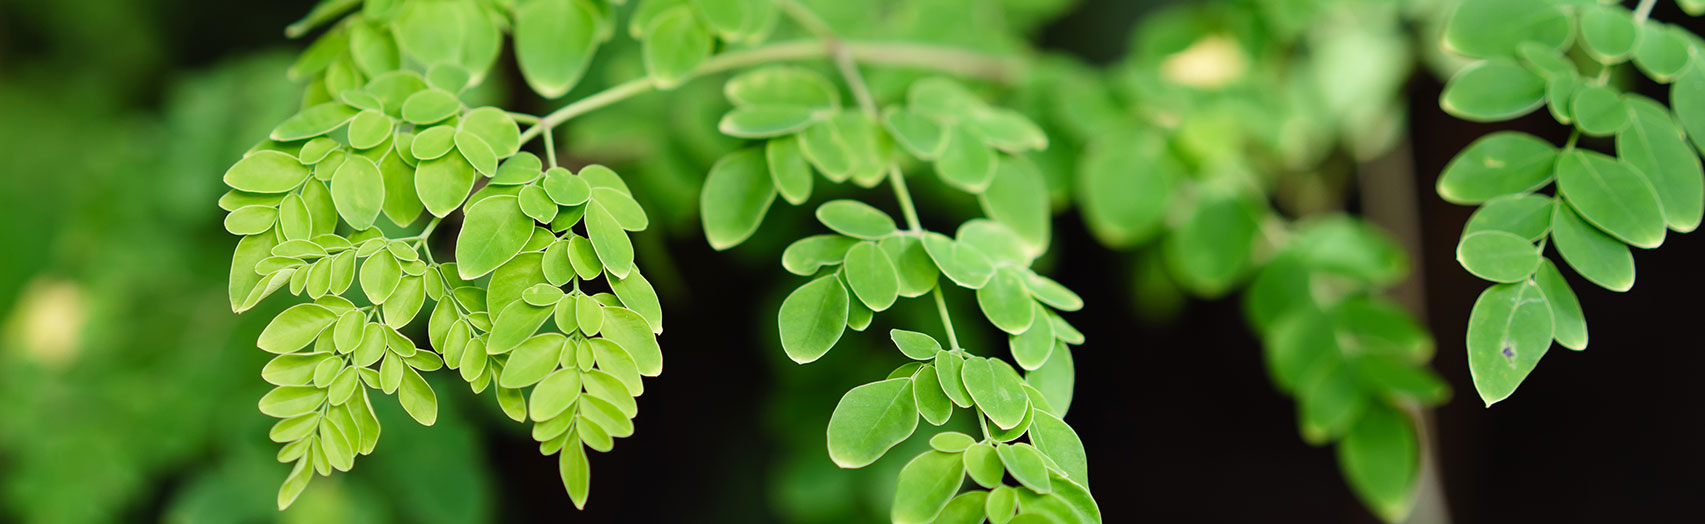 Close up of moringa leaves